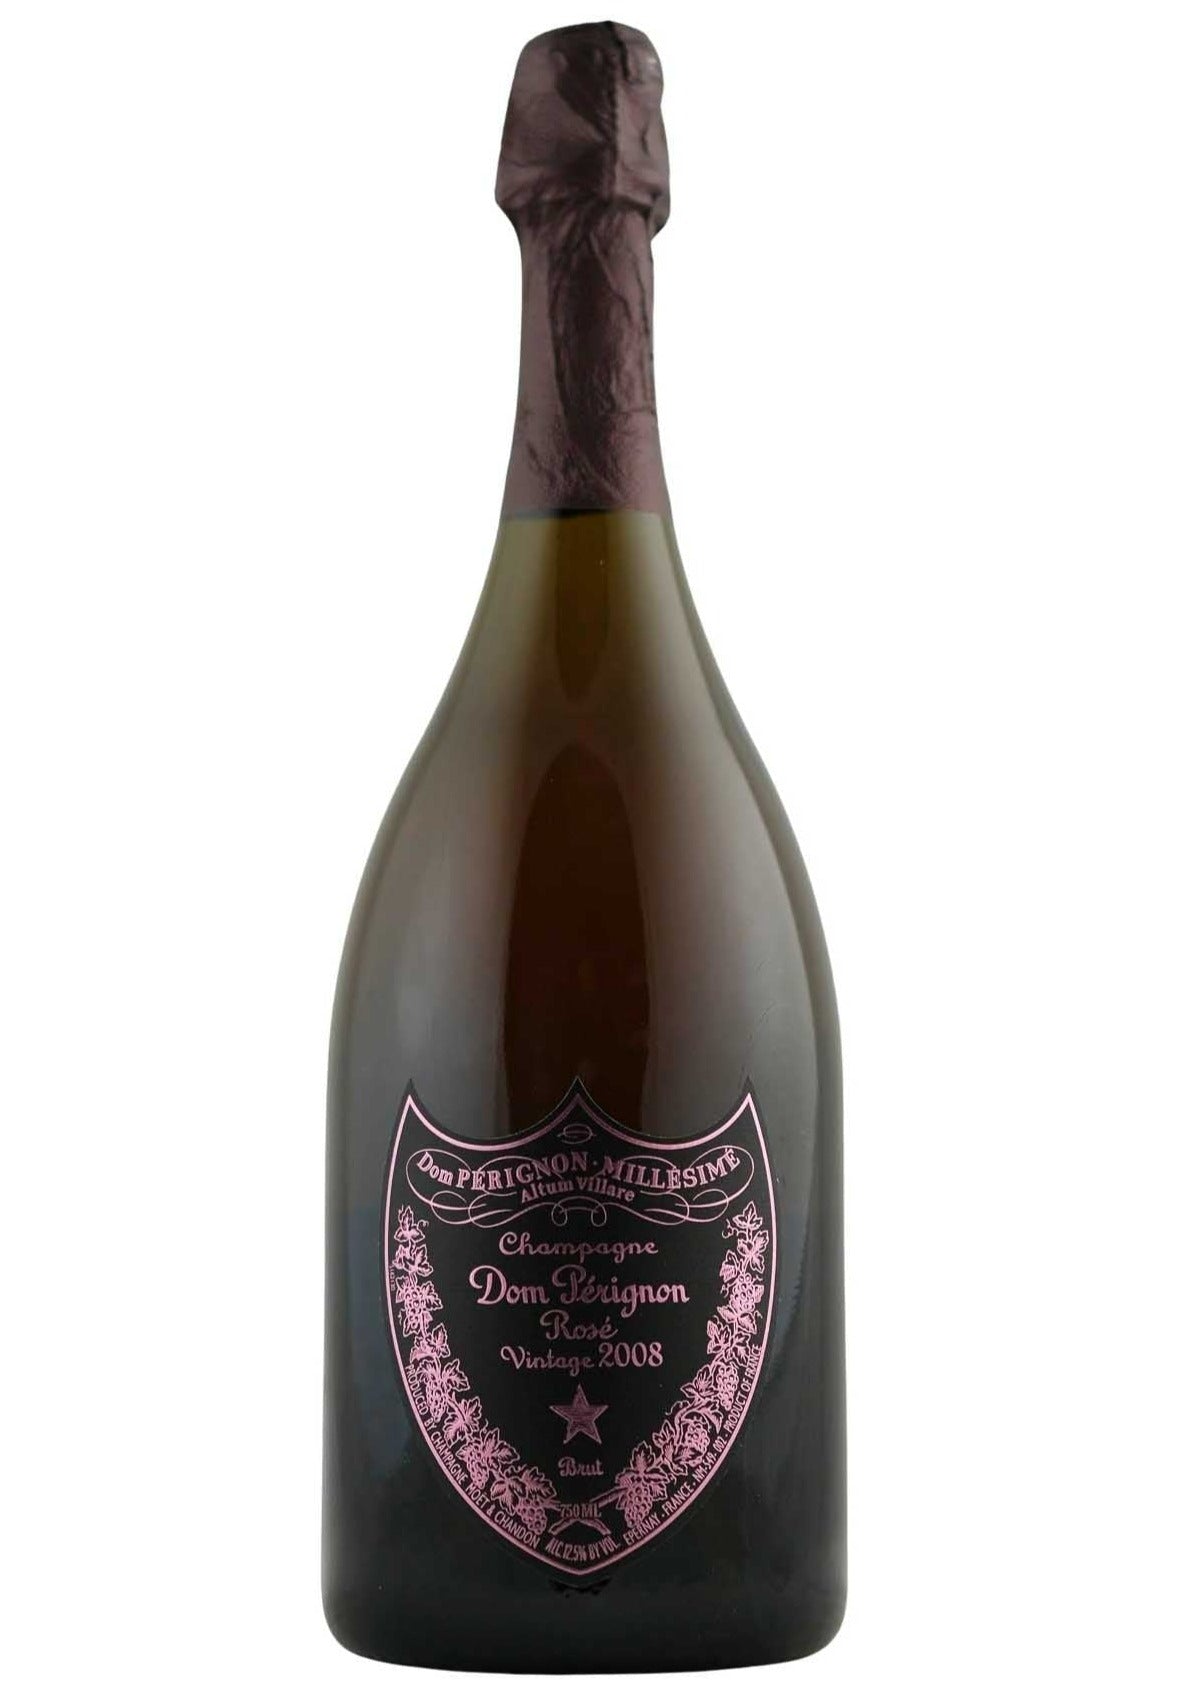 Champagne MOET CHANDON BRUT Rose Original Art Alcol Bar 